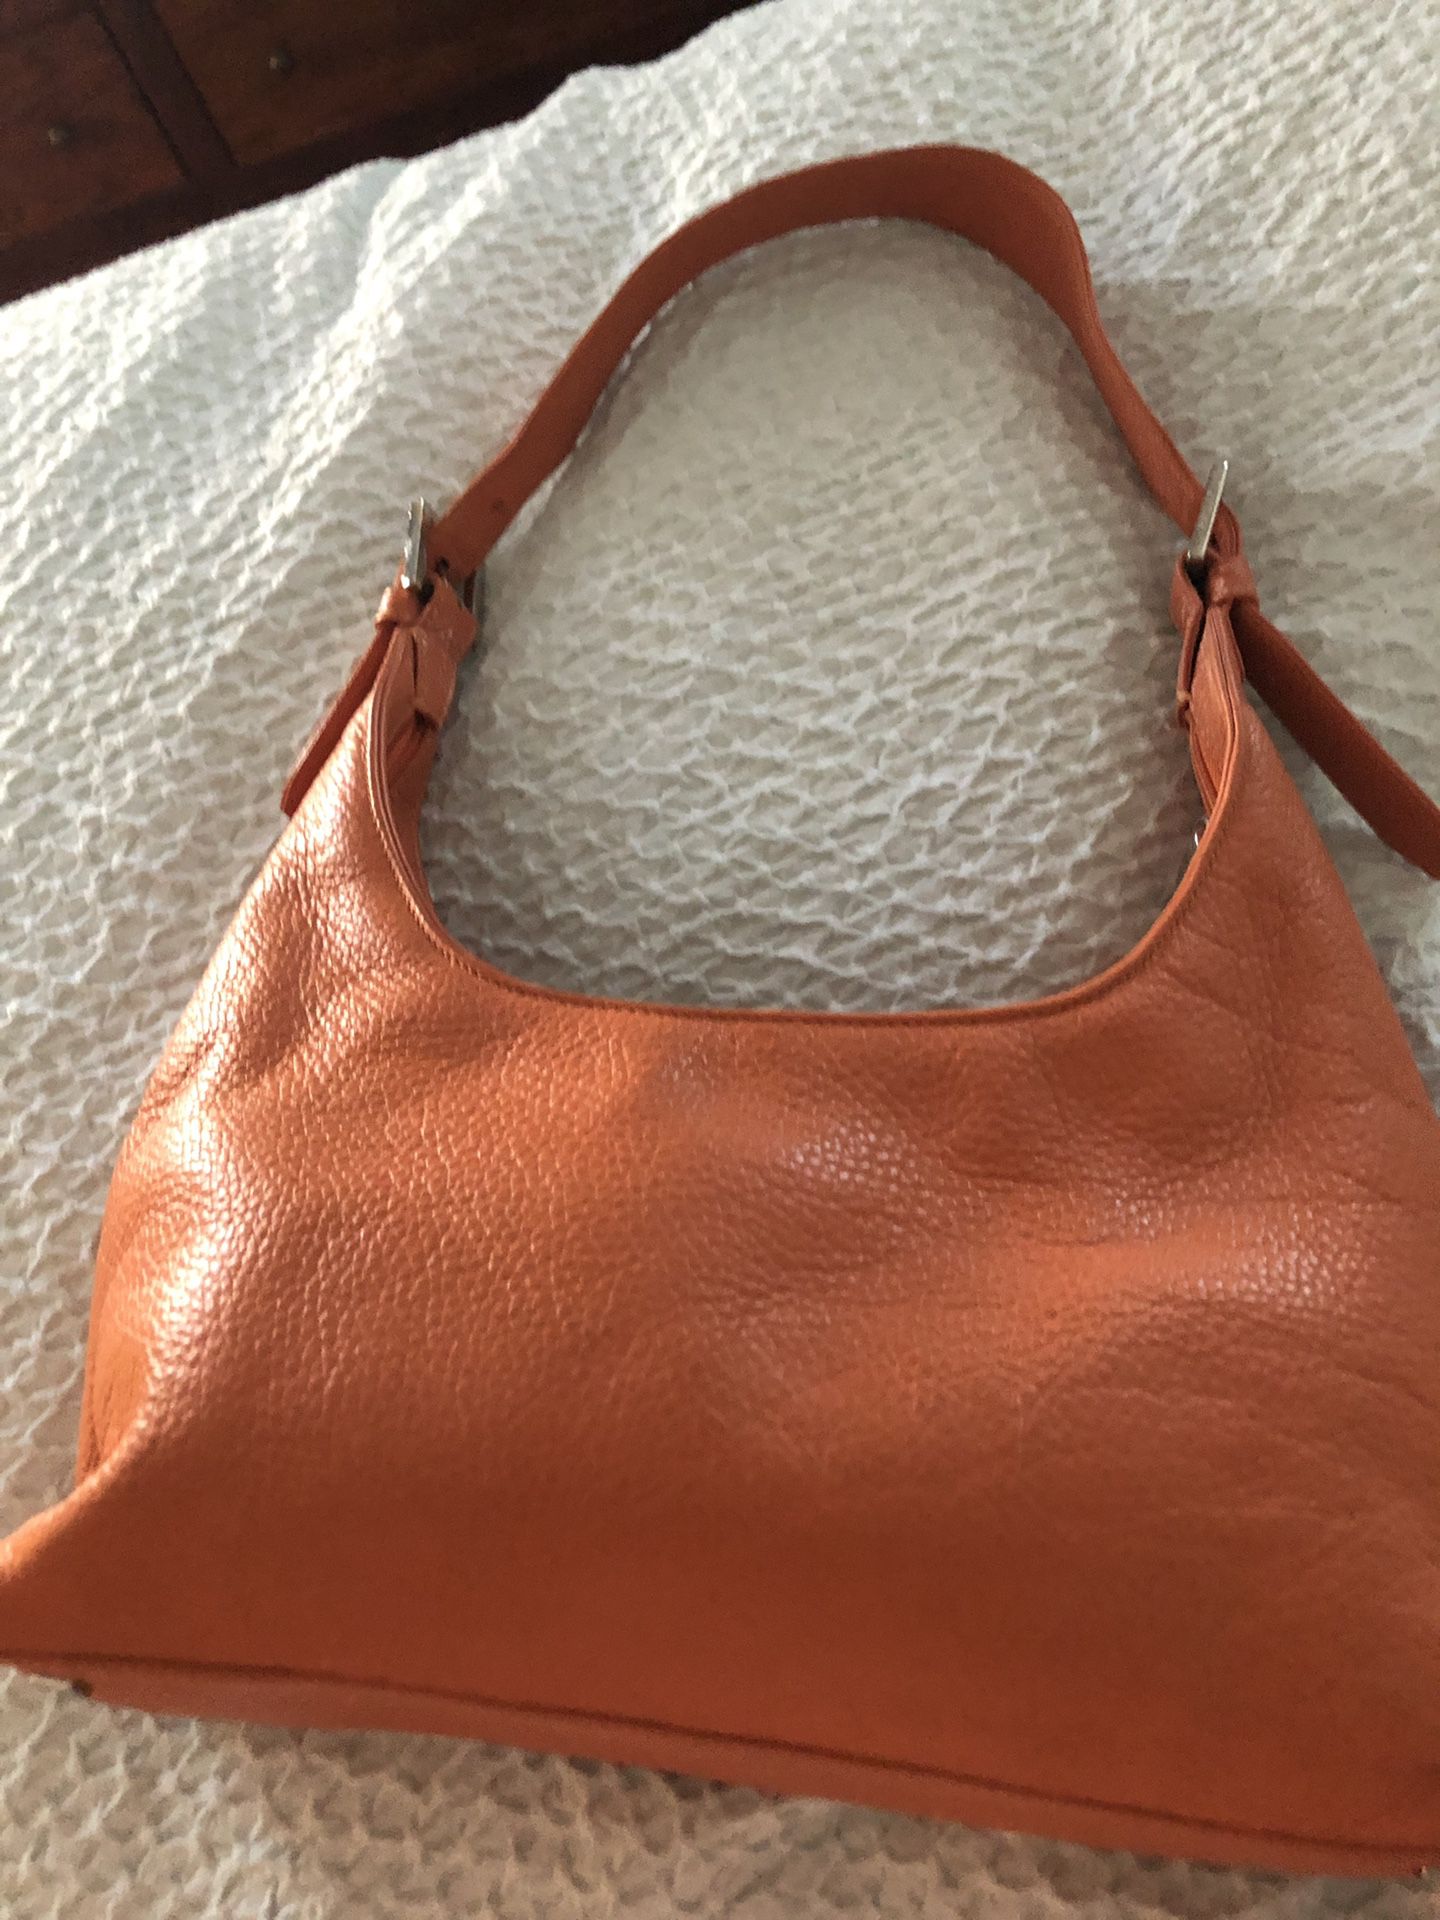 Authentic Bally leather handbag